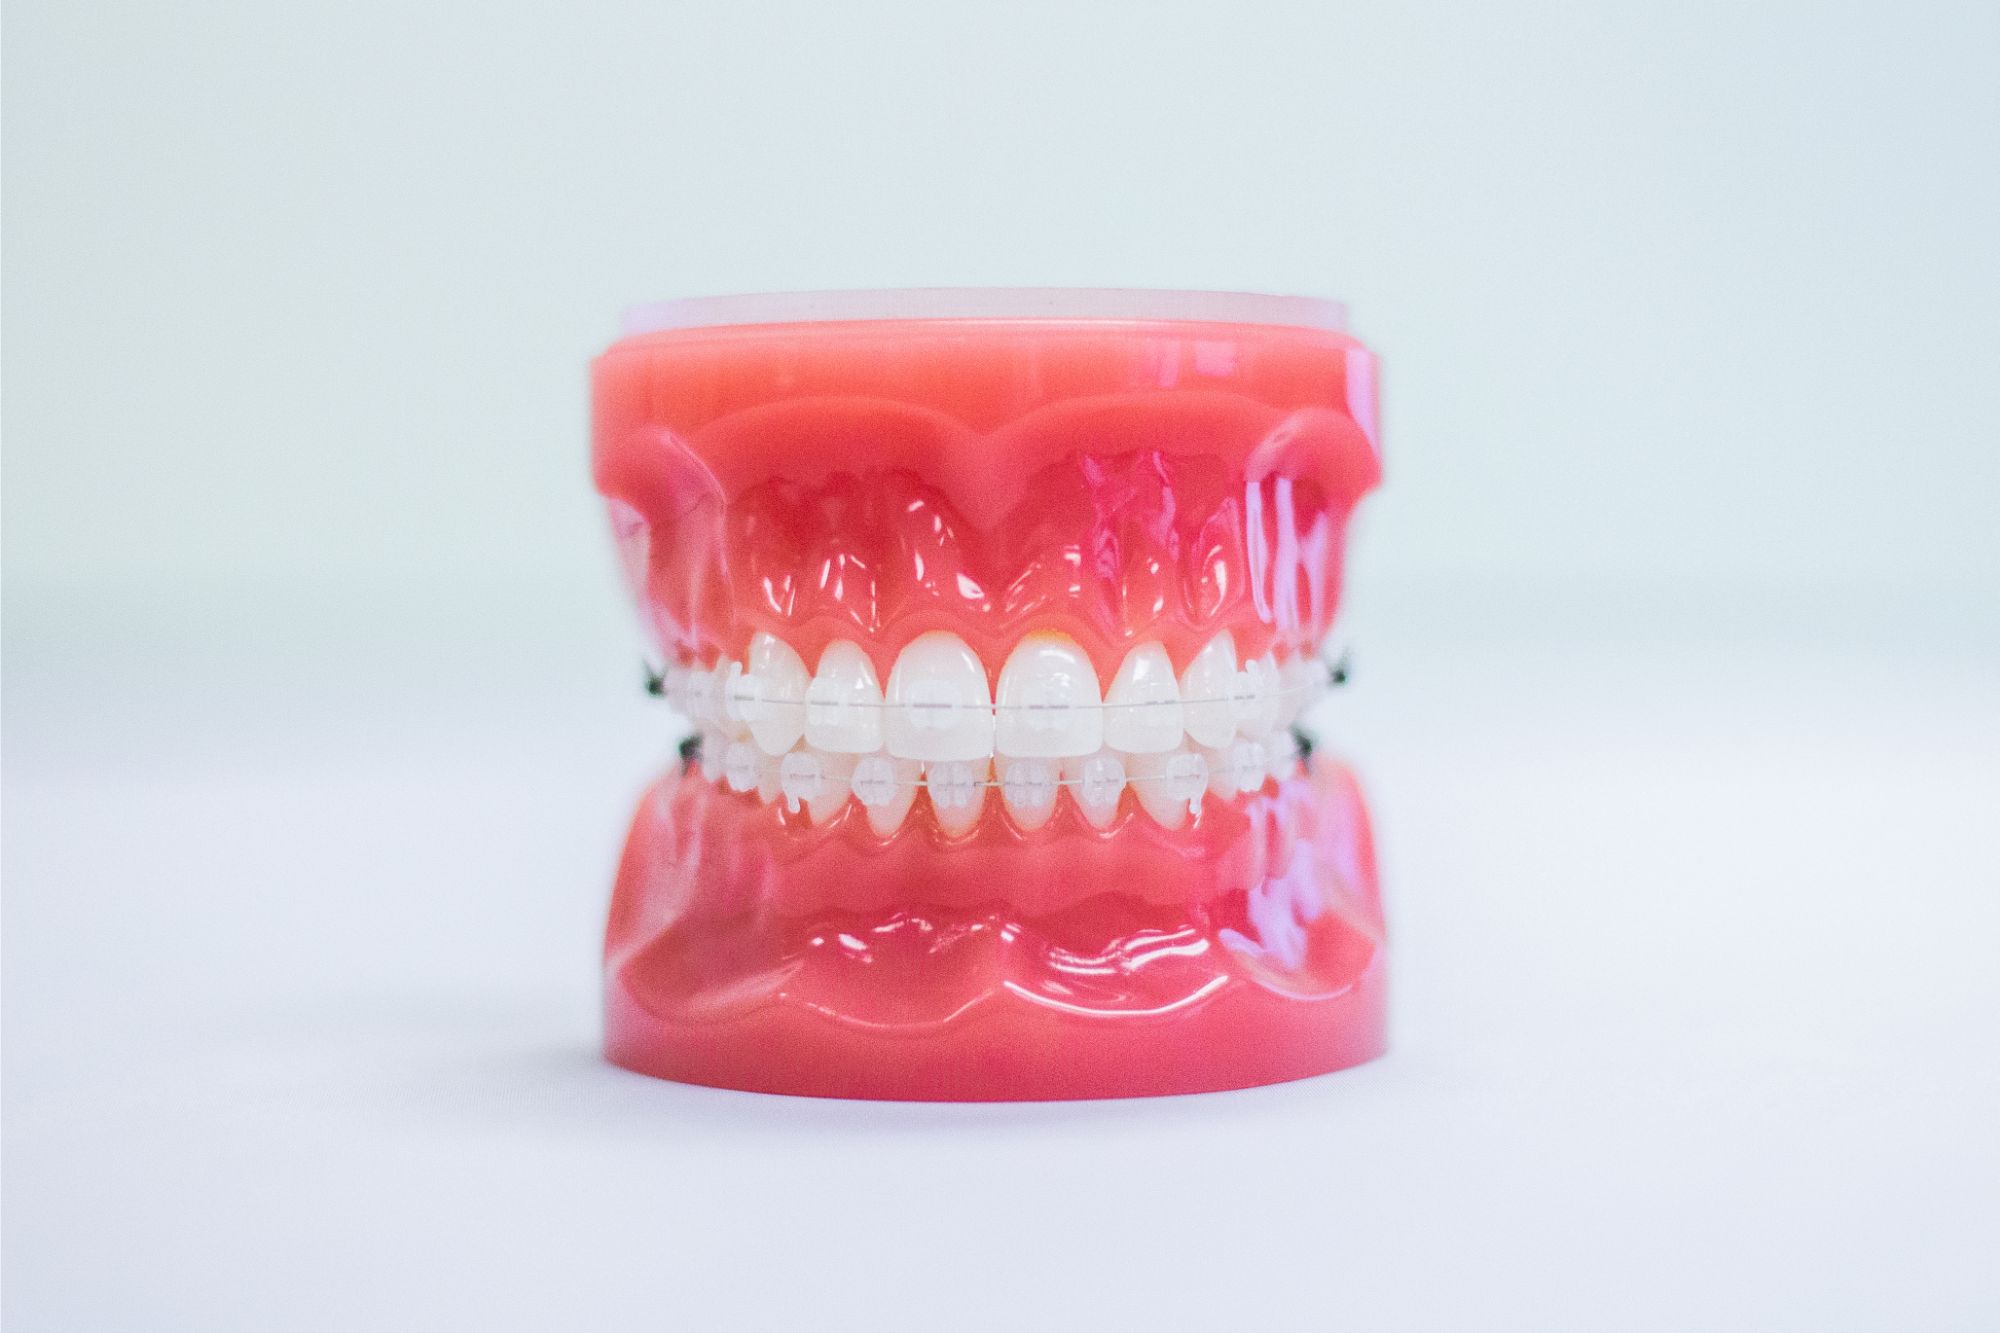 clear braces teeth model